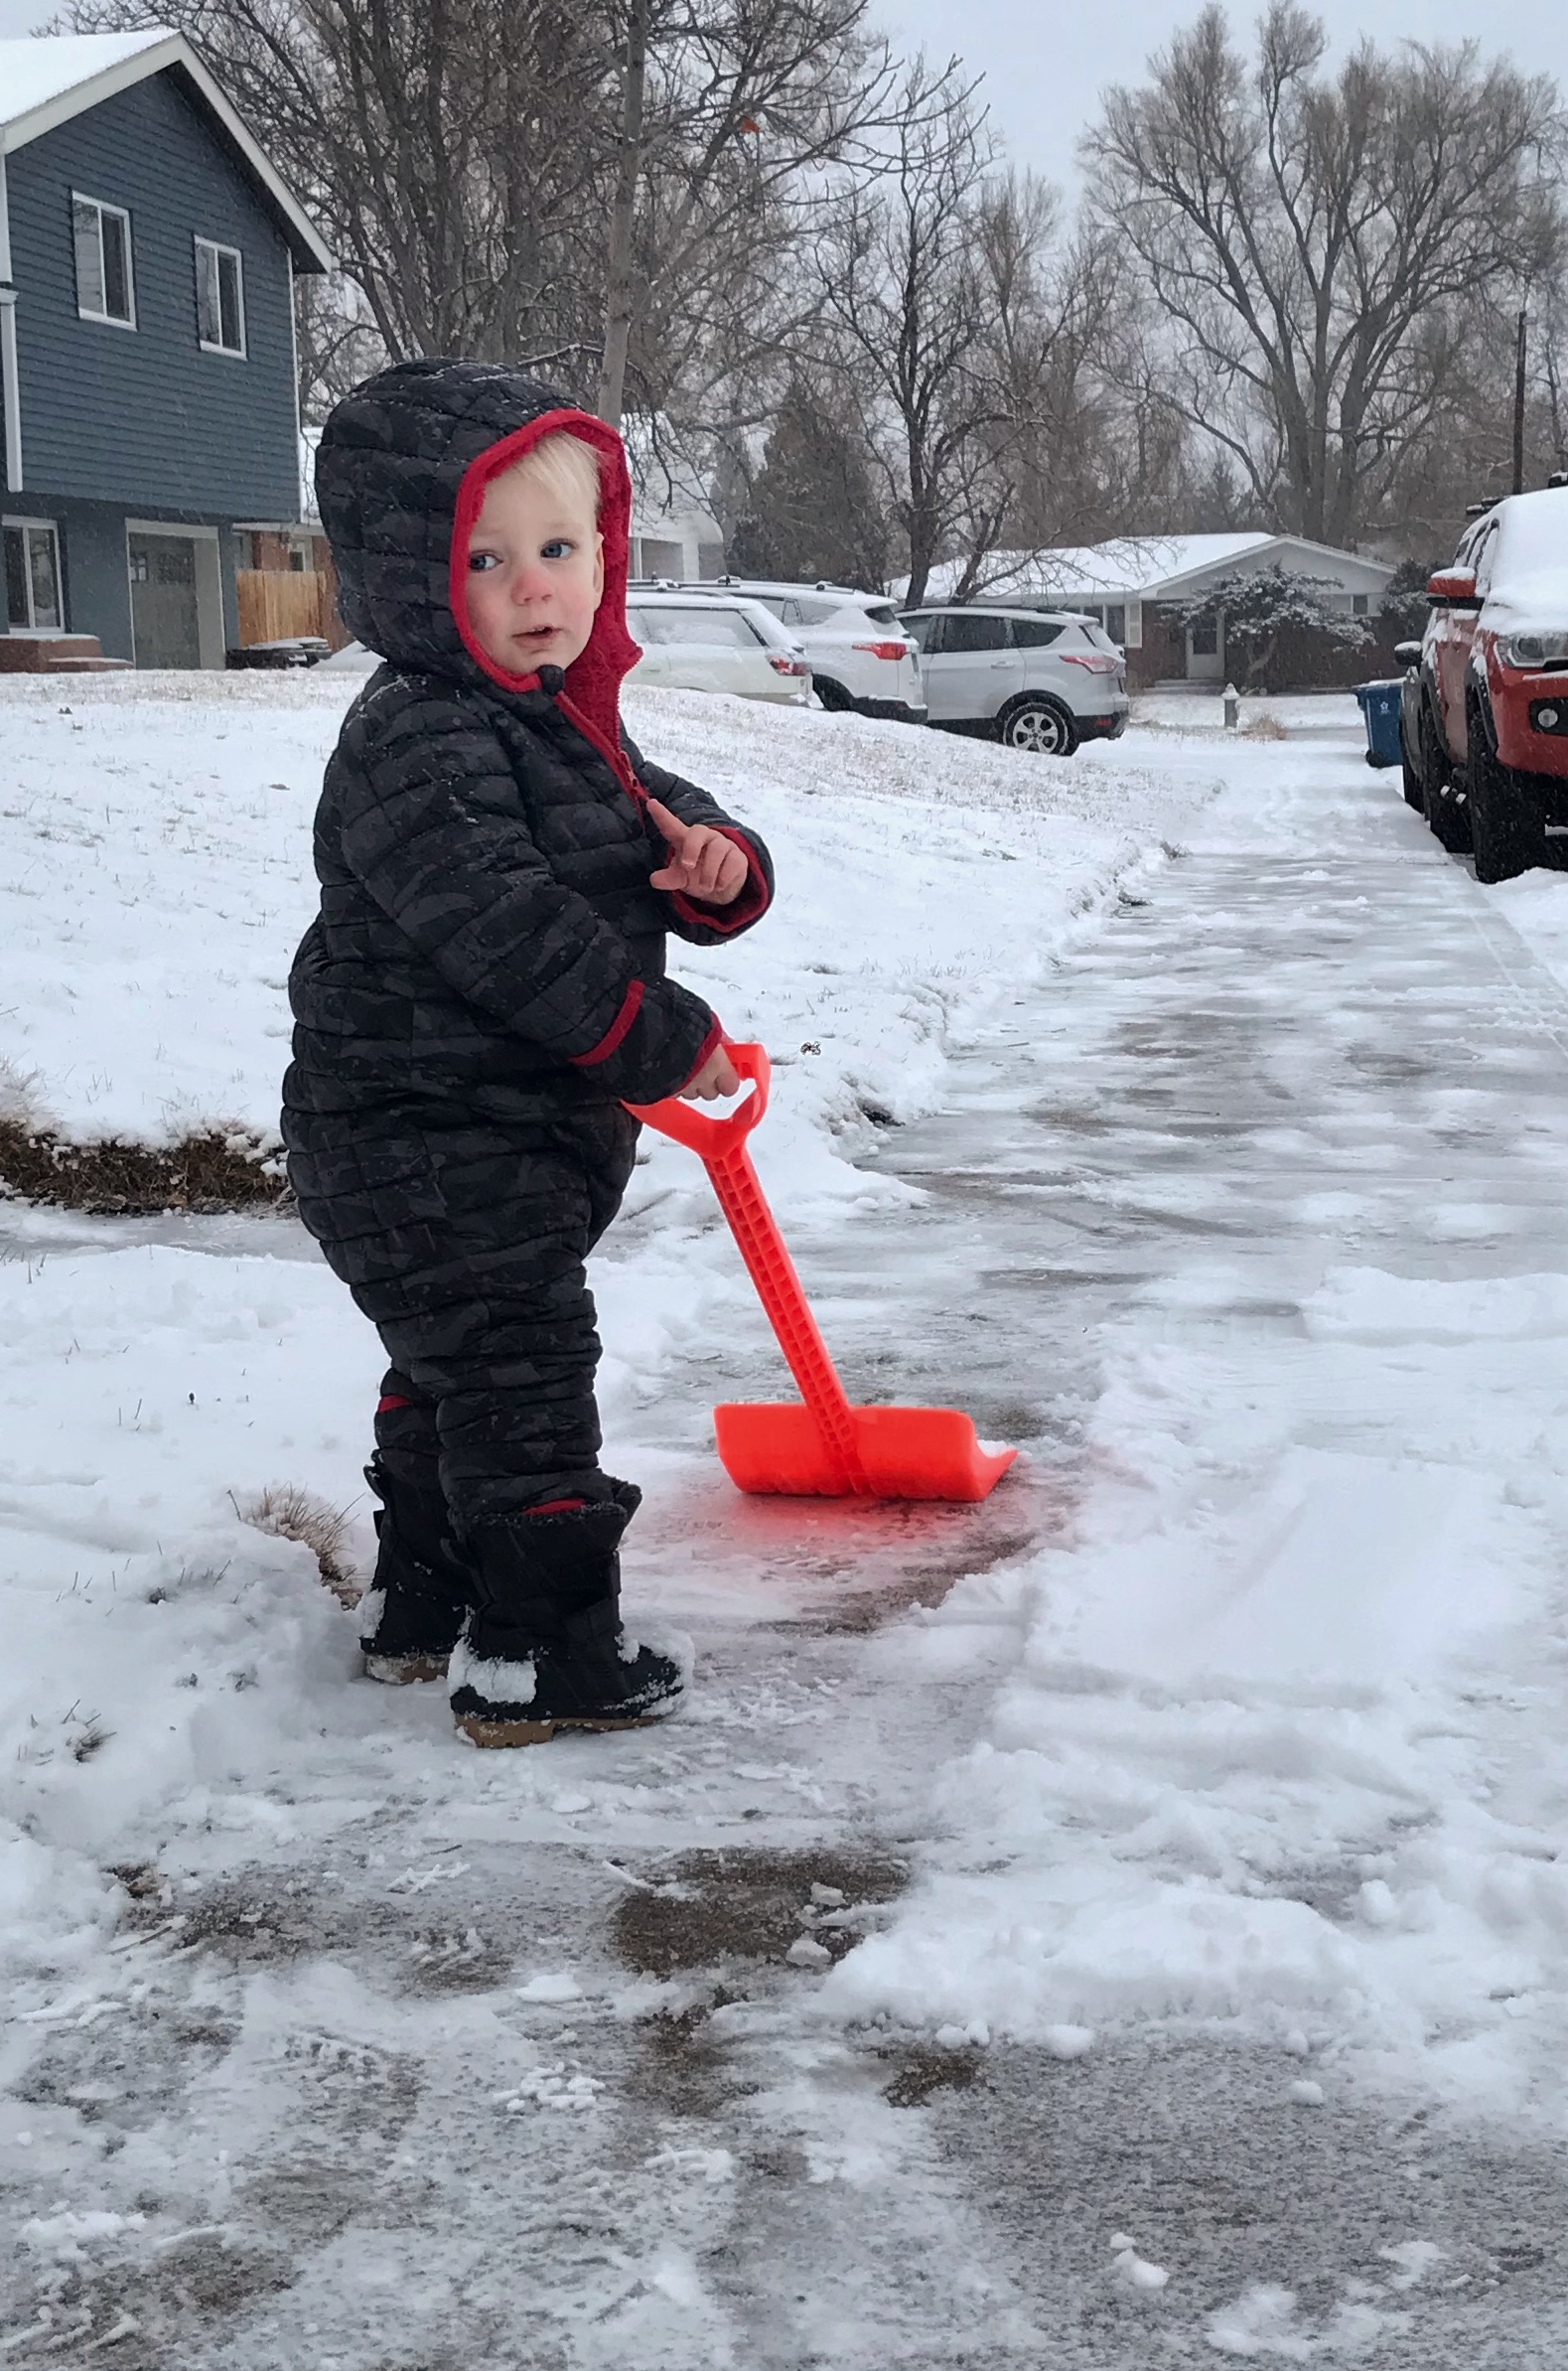 Owen shoveling snow